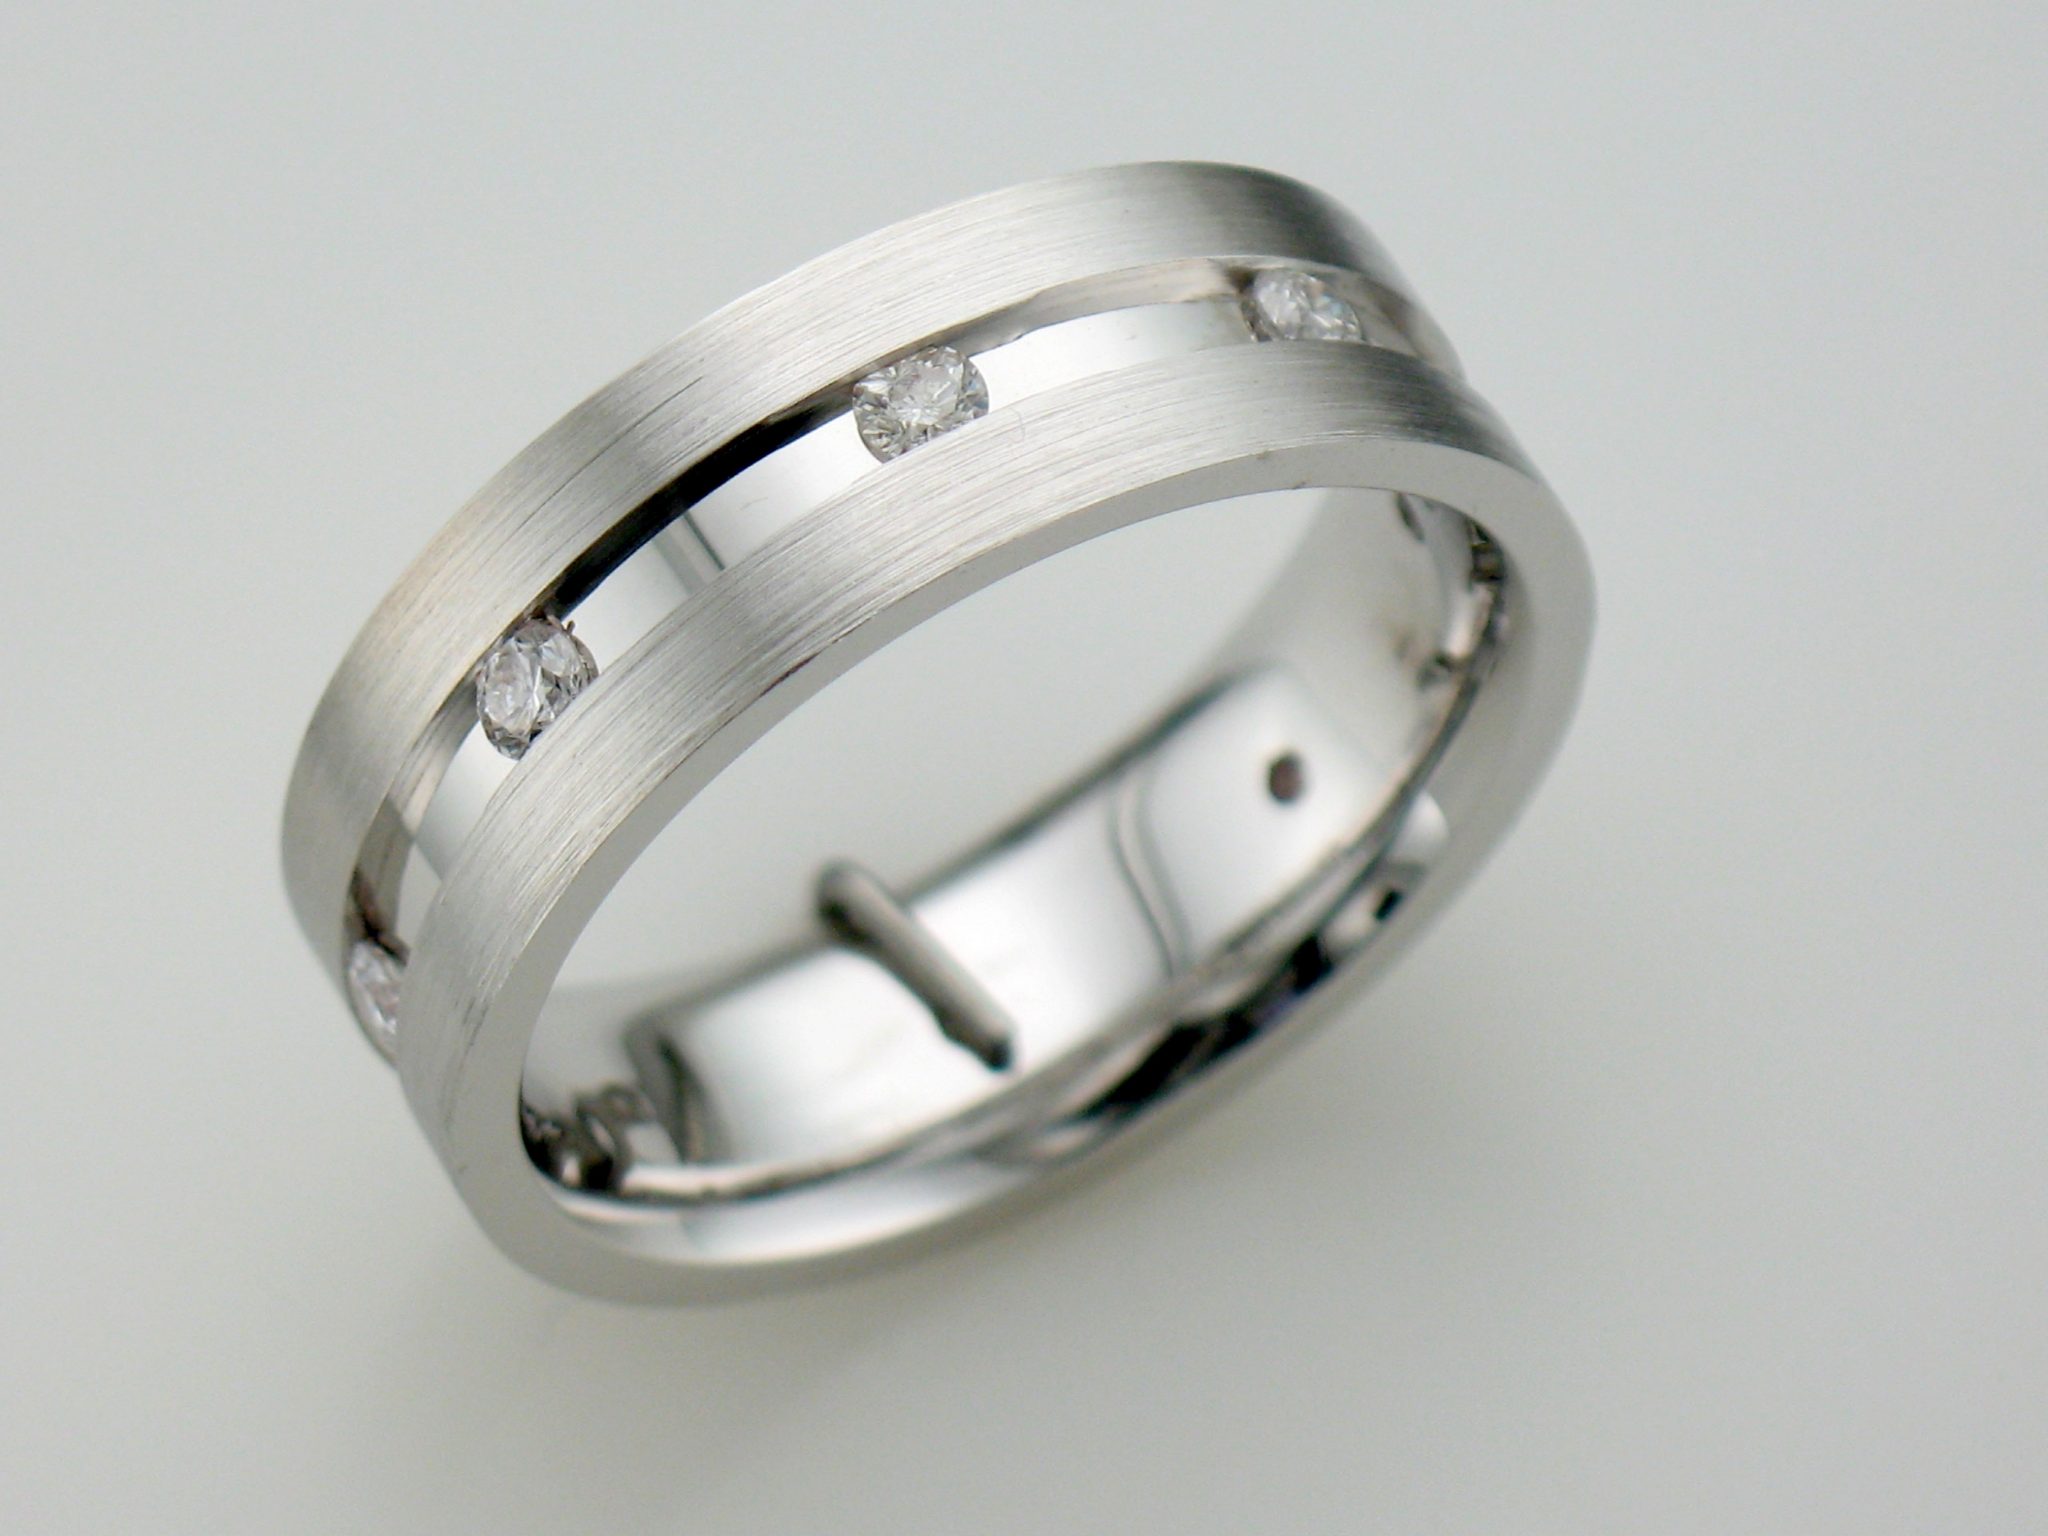 Bespoke Wedding Ring For Your Man